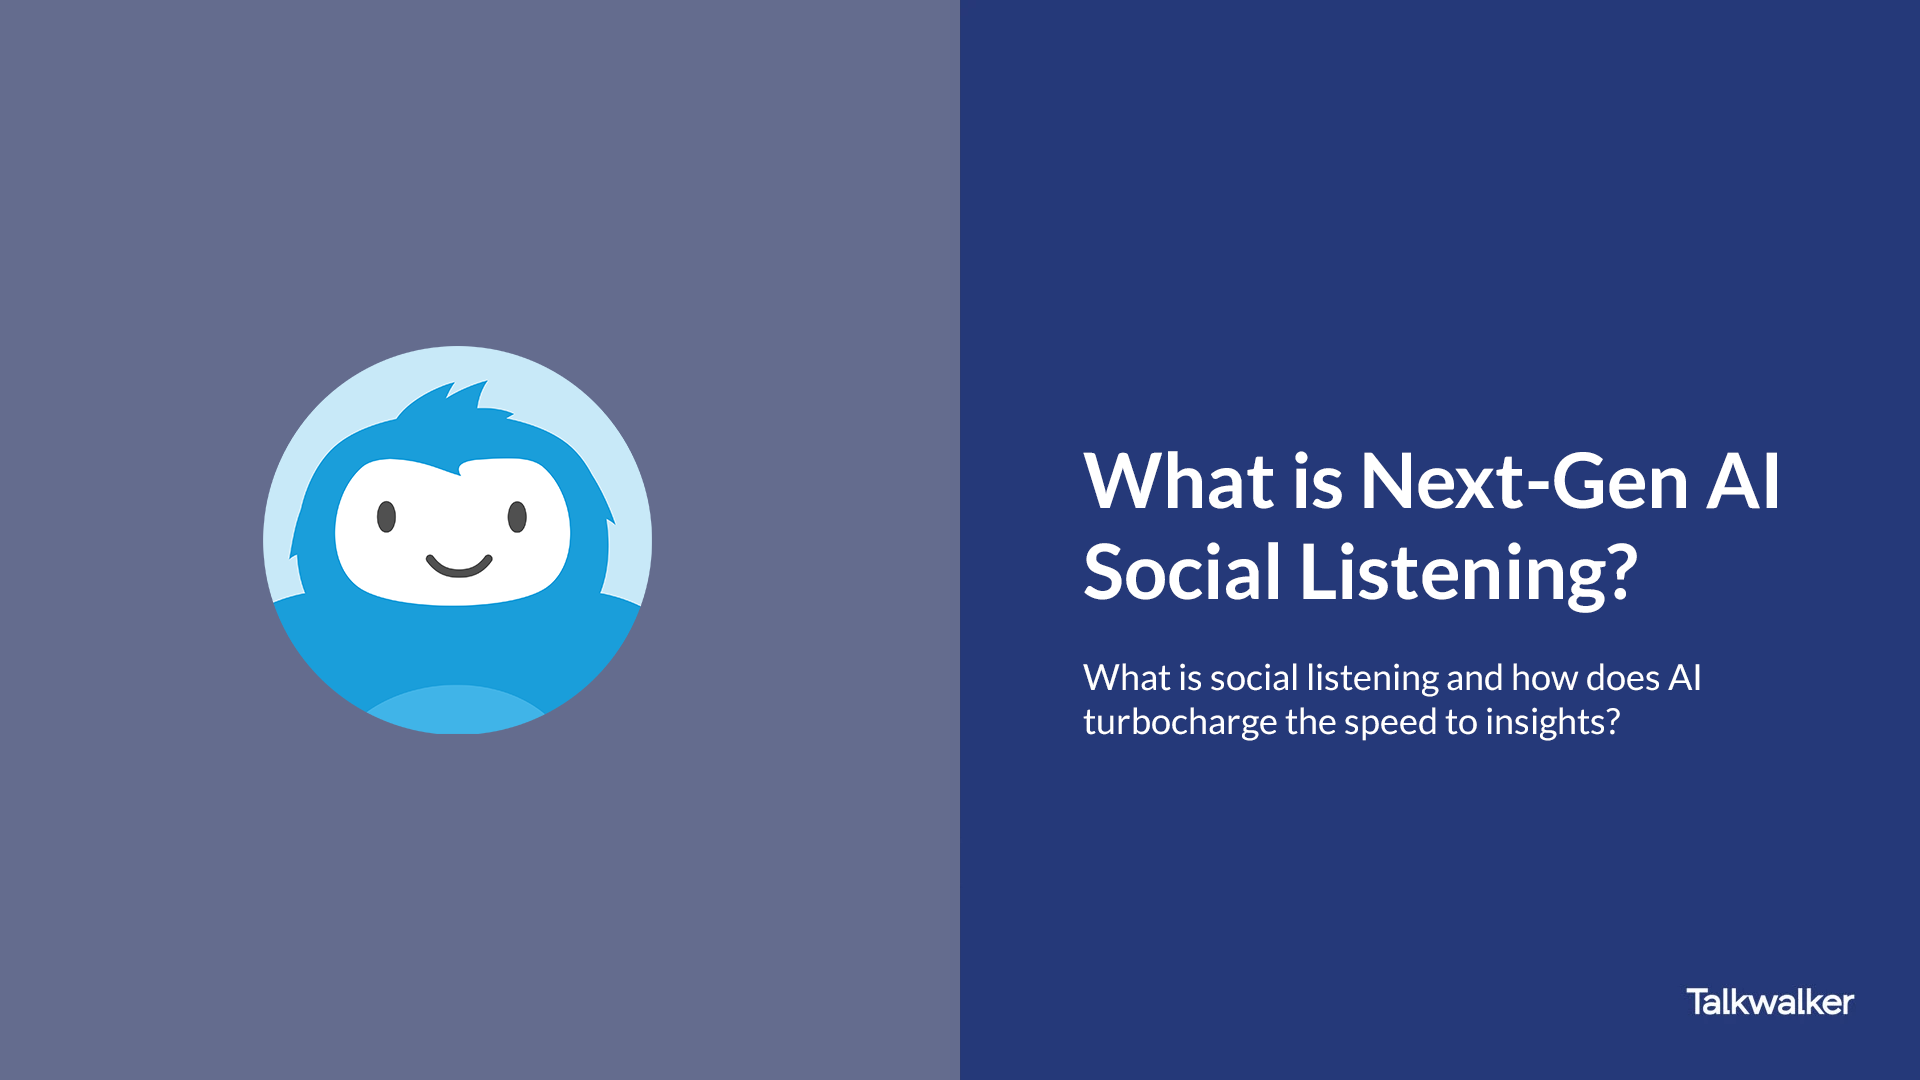 Talkwalker: What is Next-Gen AI Social Listening?